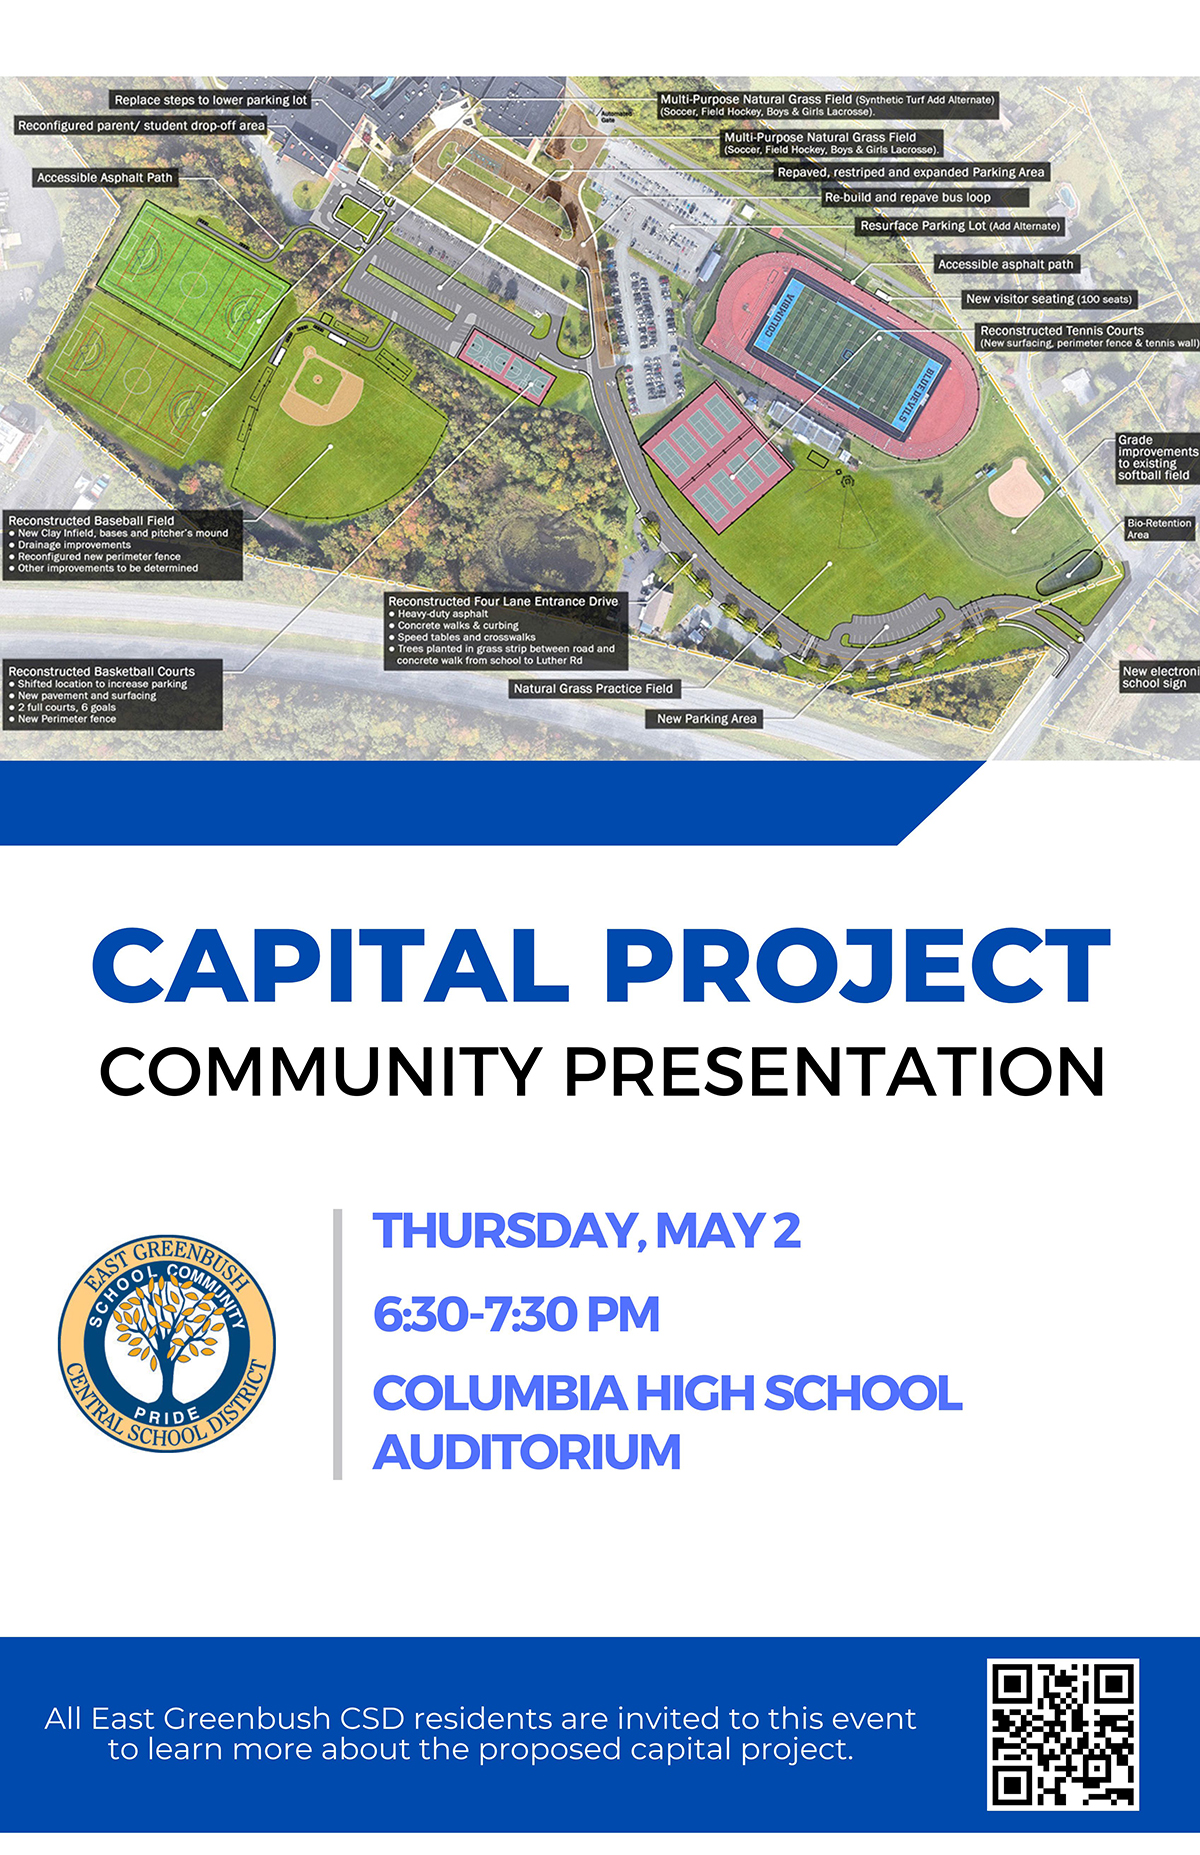 Capital Project Community Presentation flyer